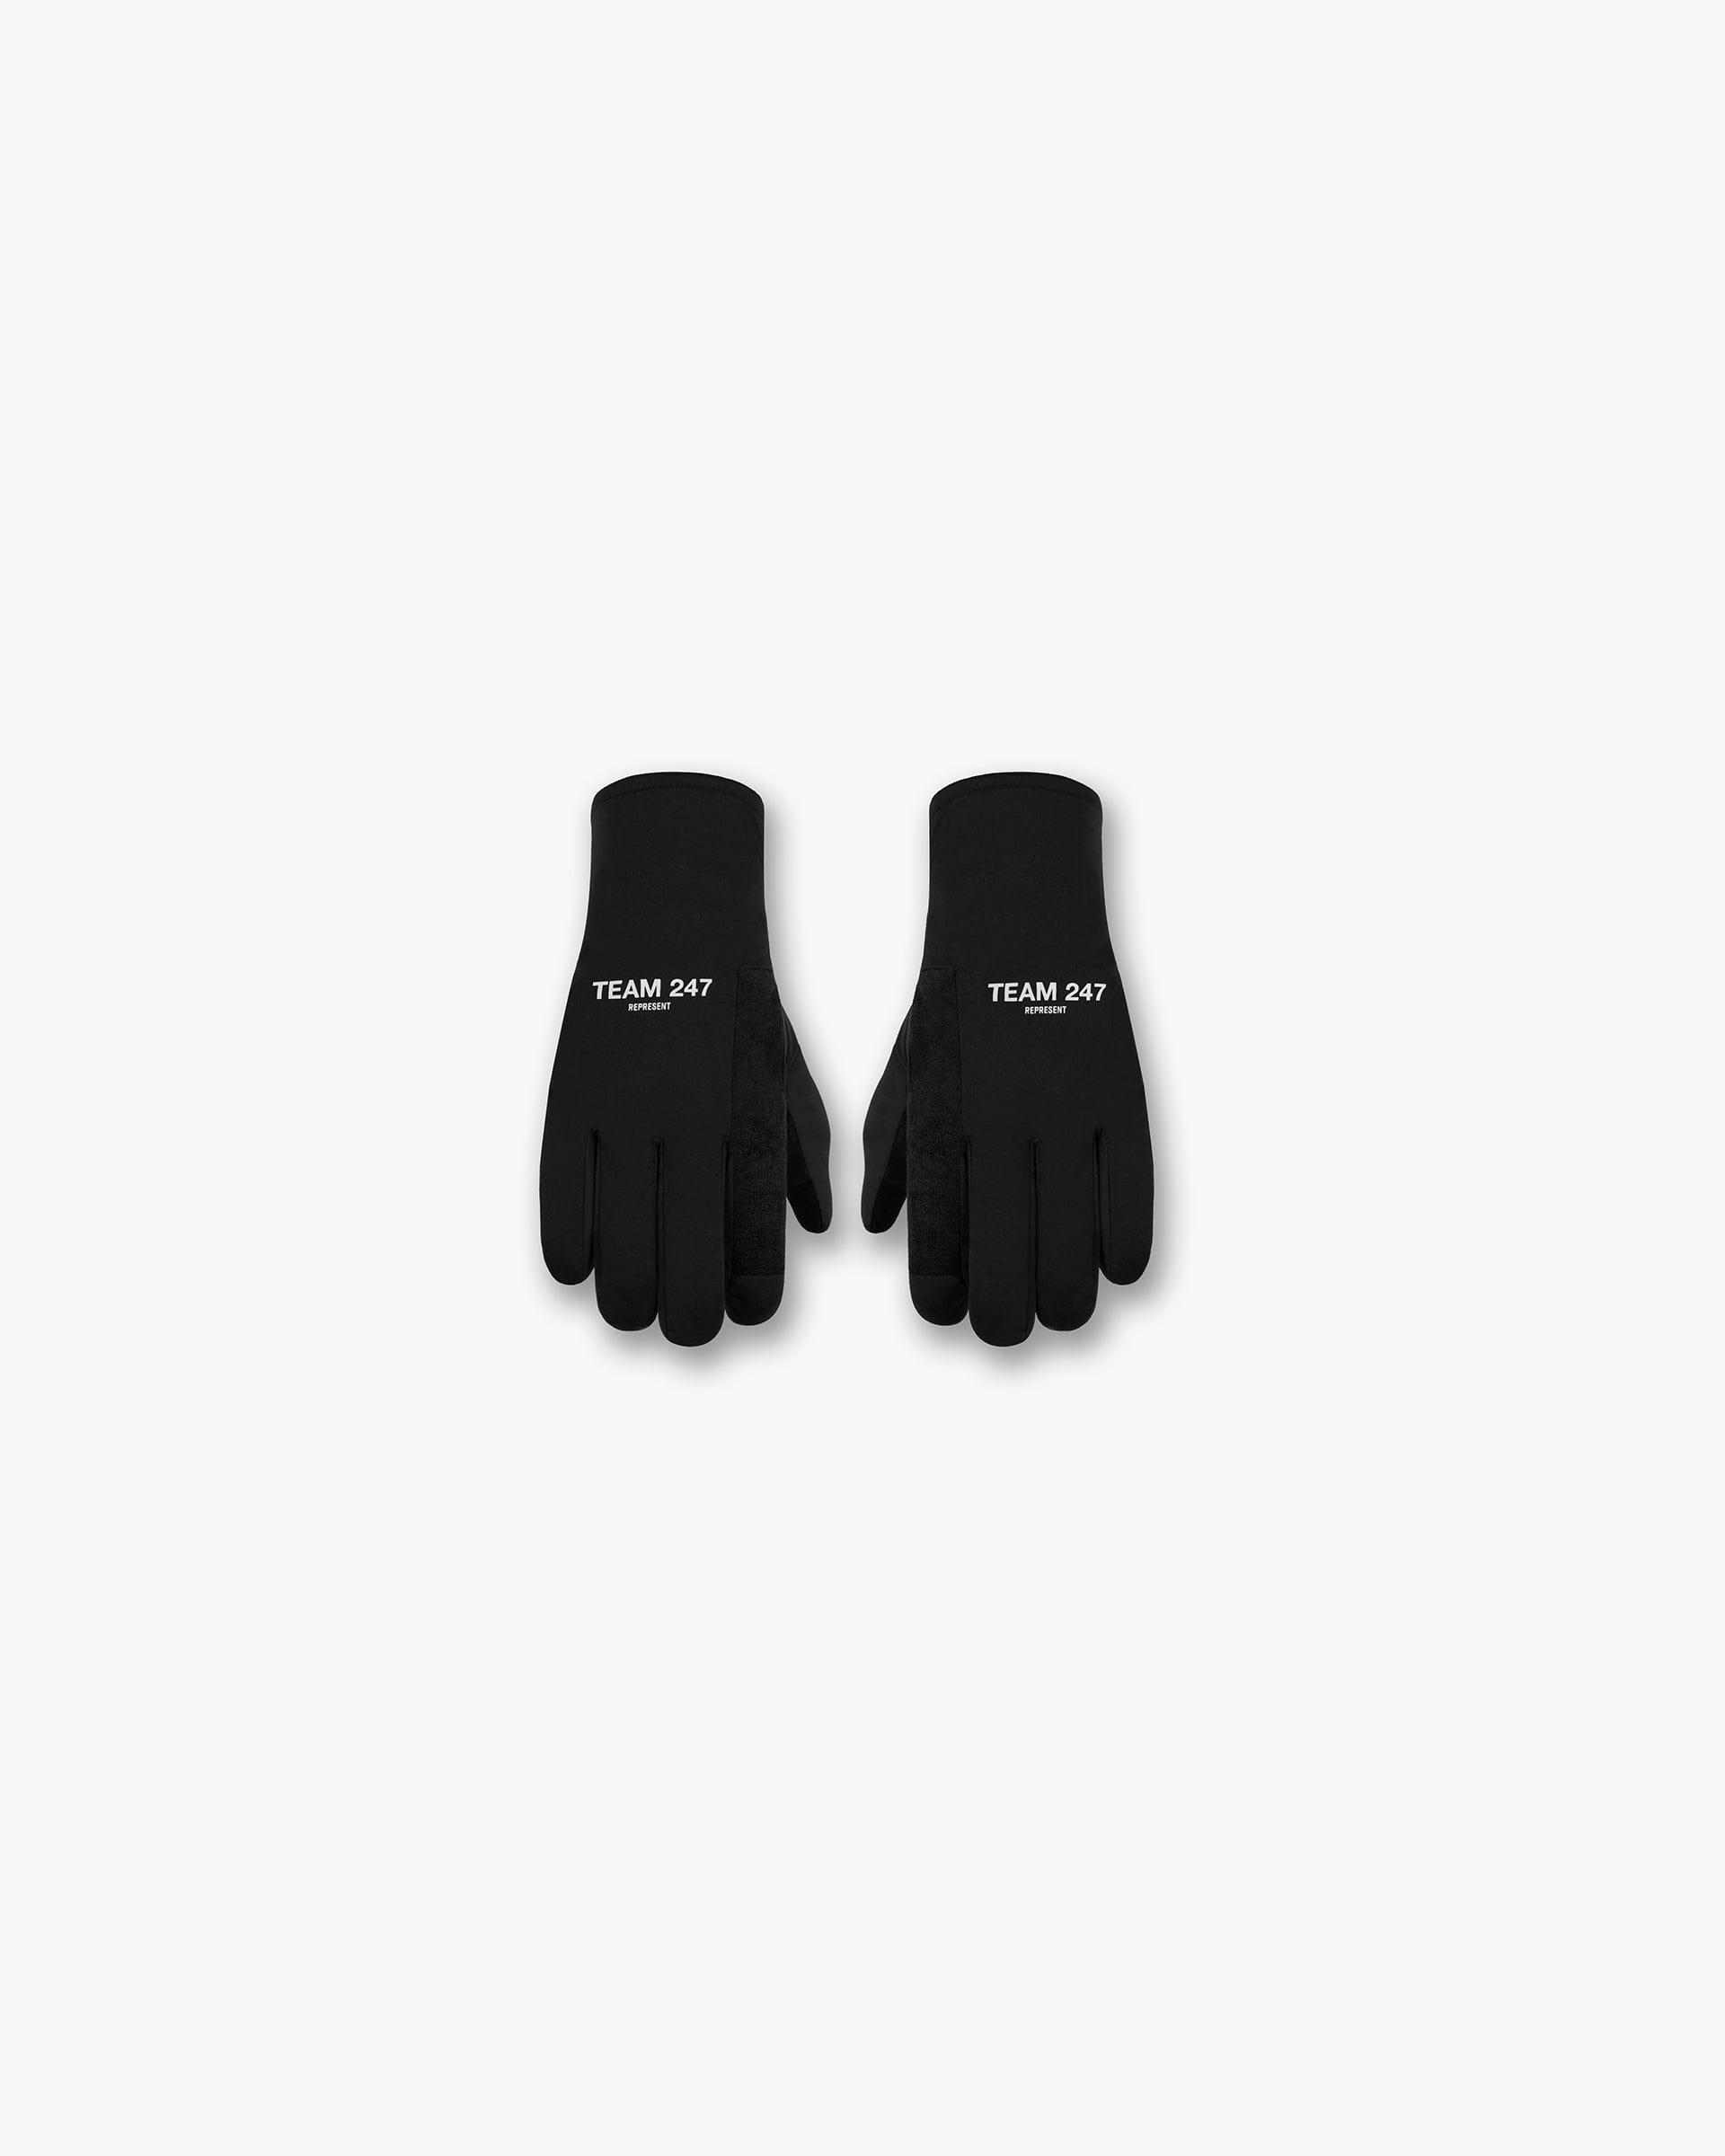 Team 247 Winter Gloves - Black